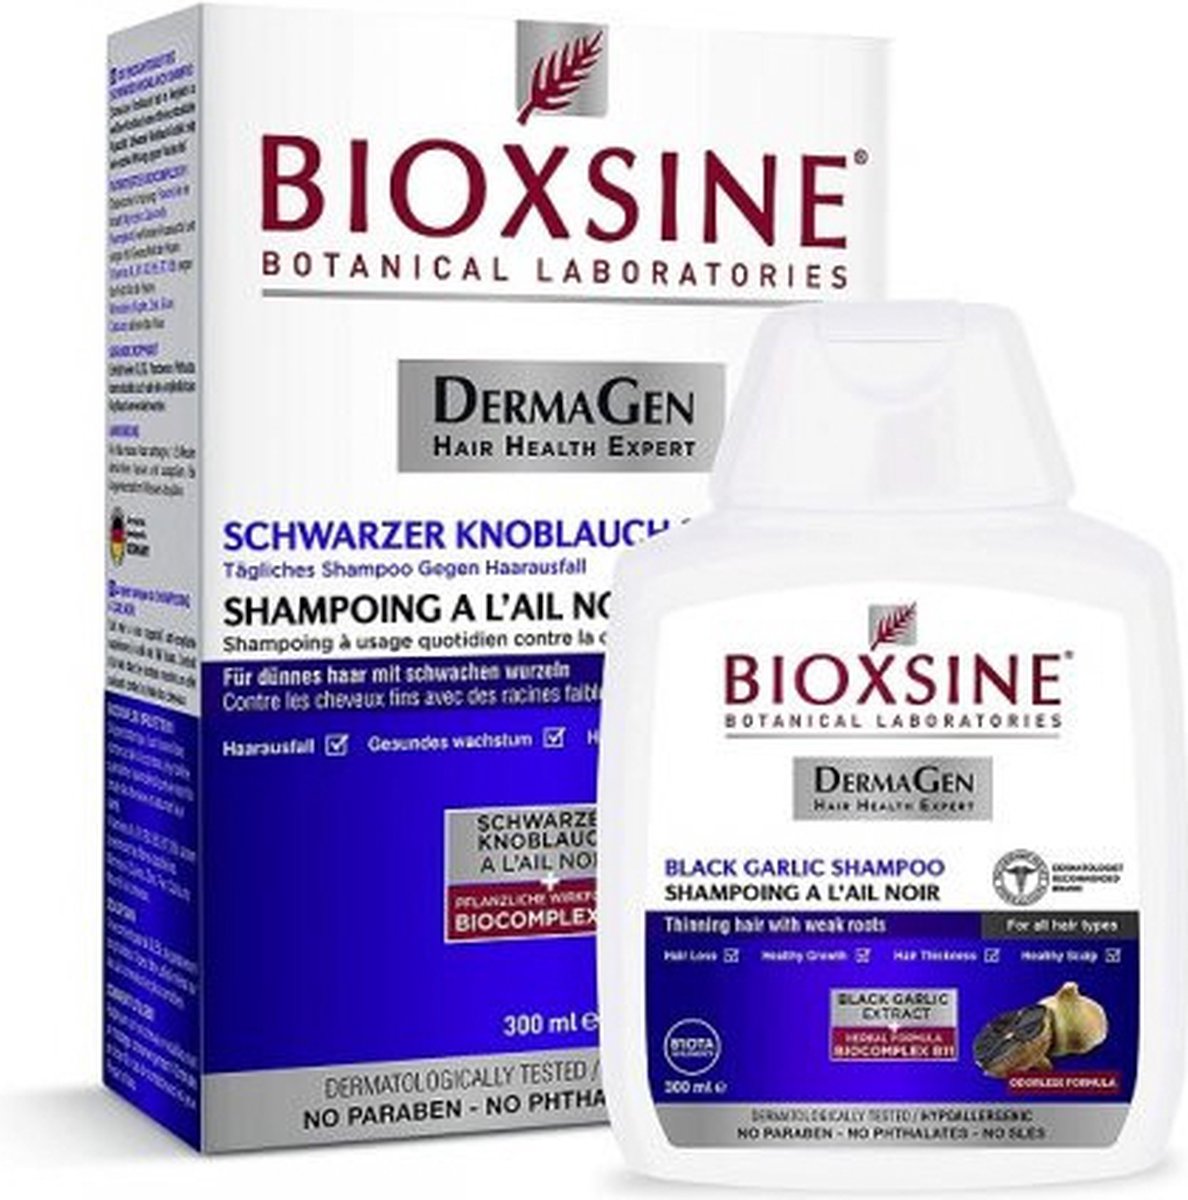 Bioxsine - Dermagen Zwarte Knoflook Shampoo voor Haaruitval 300ml - Anti-Haaruival- Herbal shampoo-Bio shampoo-bioxcin-bioxsine-Biotin